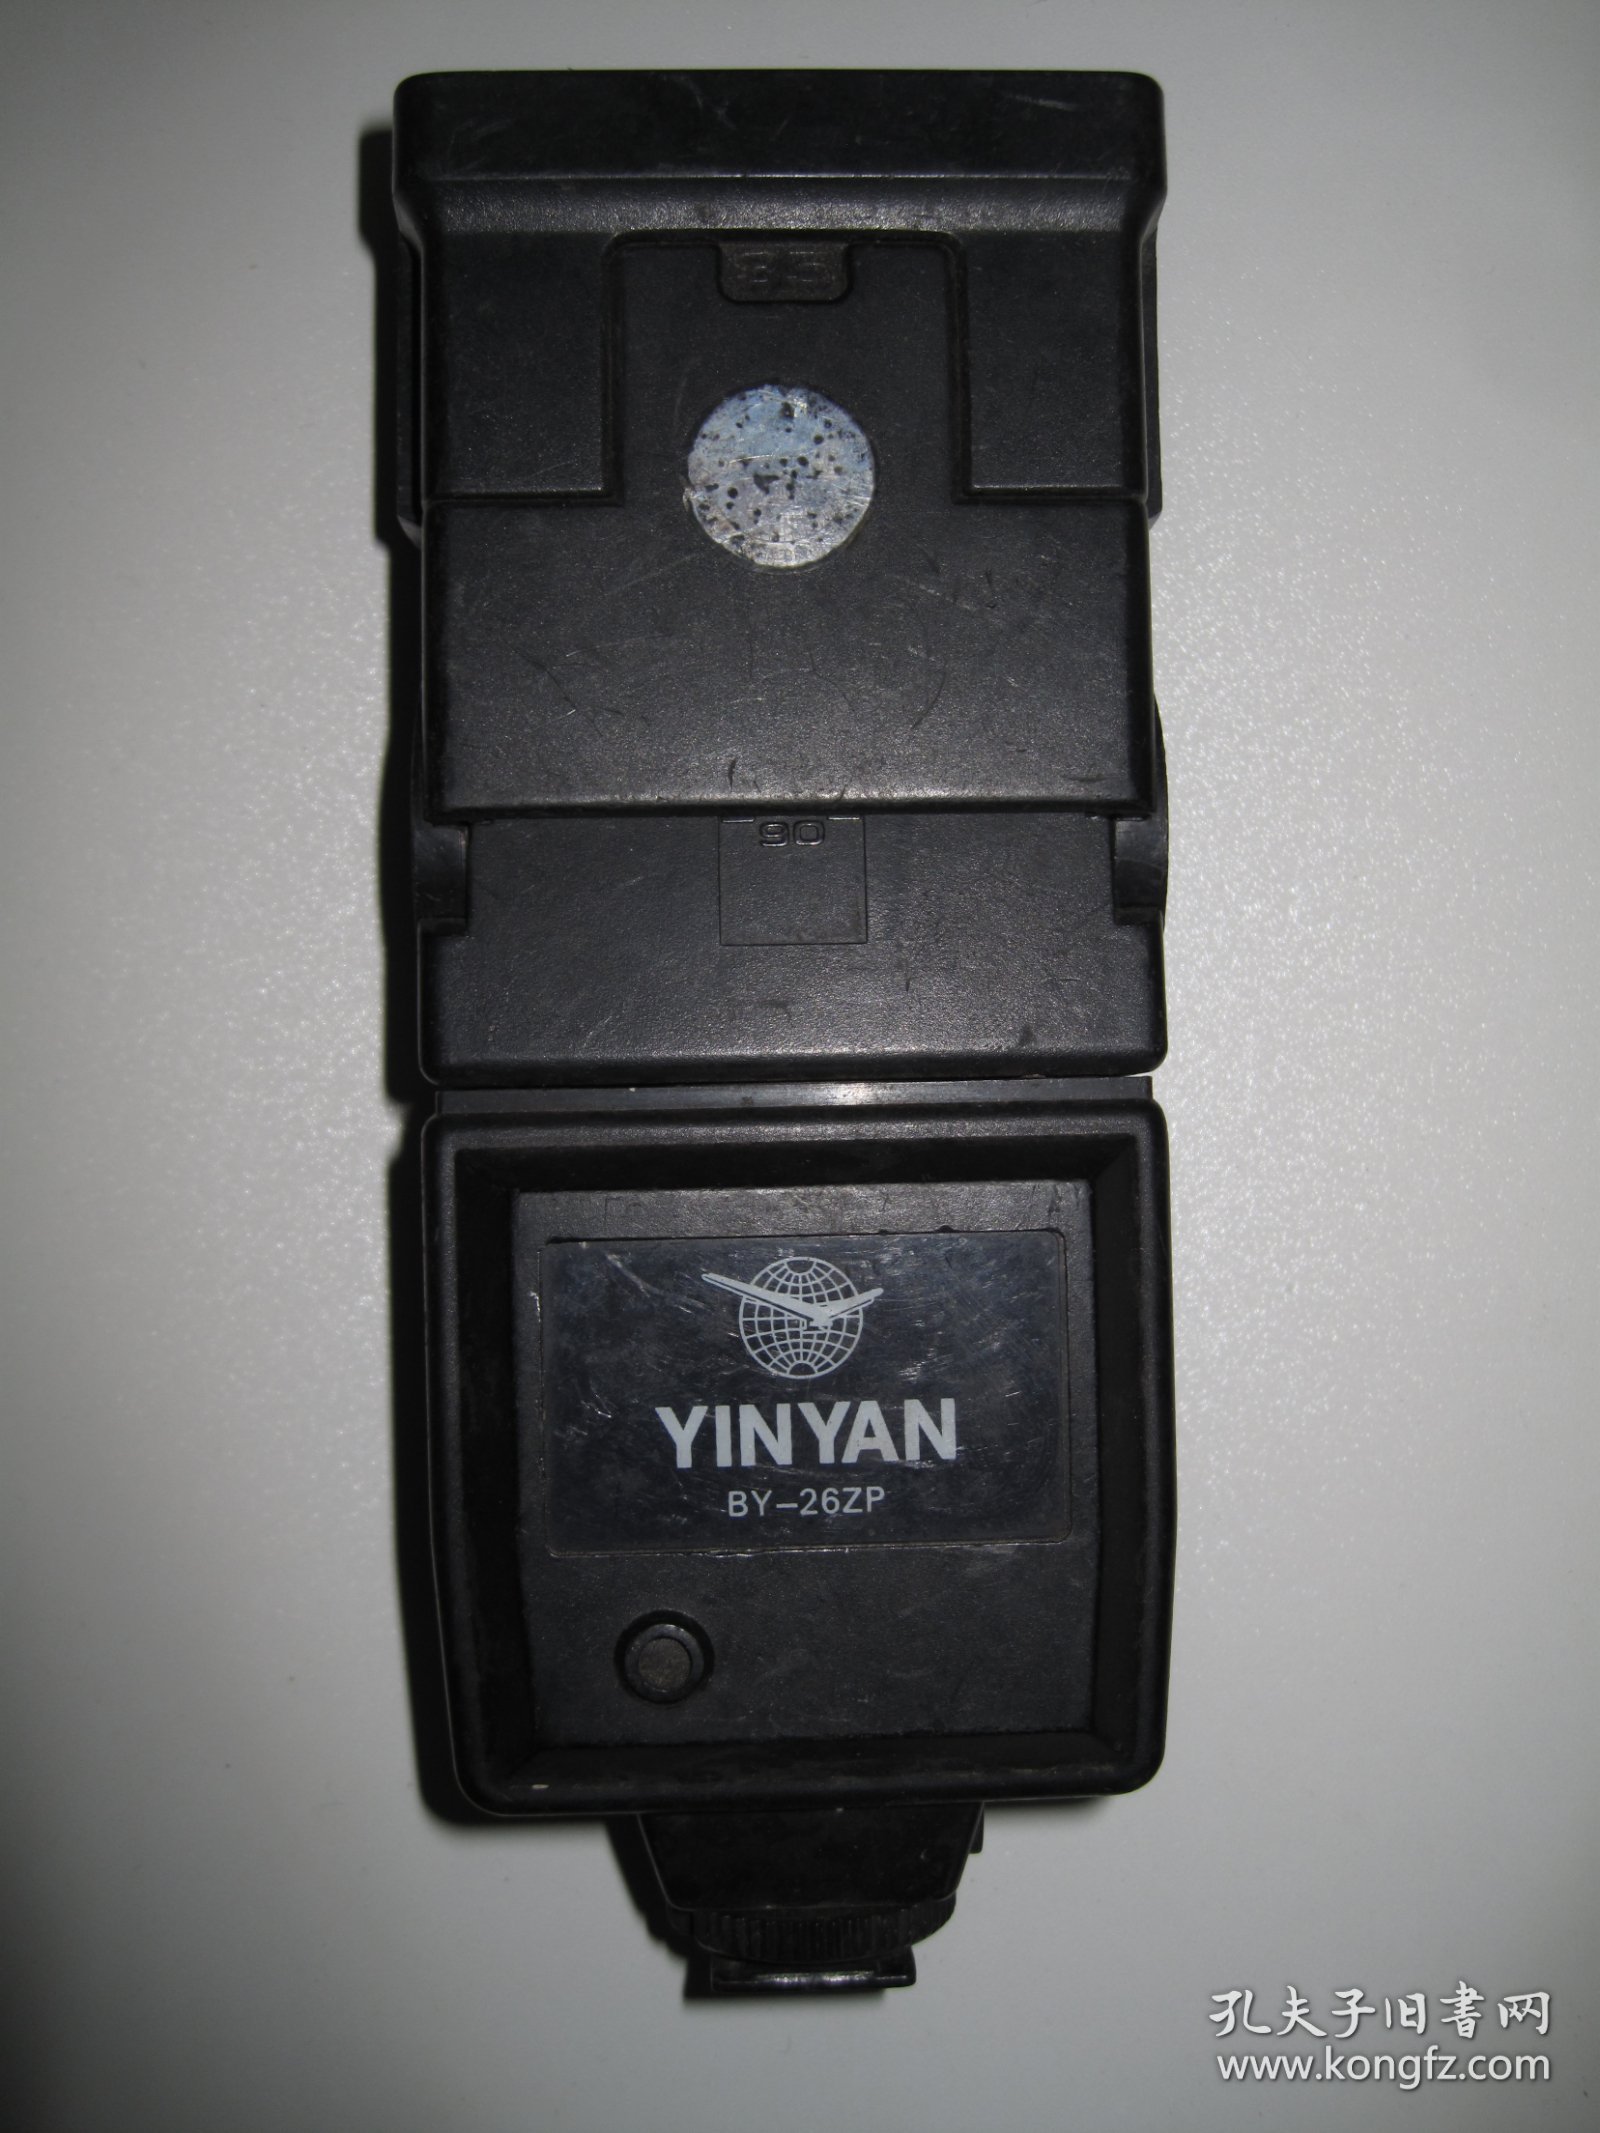 【YINYAN牌BY-26ZP型闪光灯】20世纪80年代国营摄影器材厂生产，需装入4节1.5V5号干电池供电。品相好，完好无损，可正常使用。